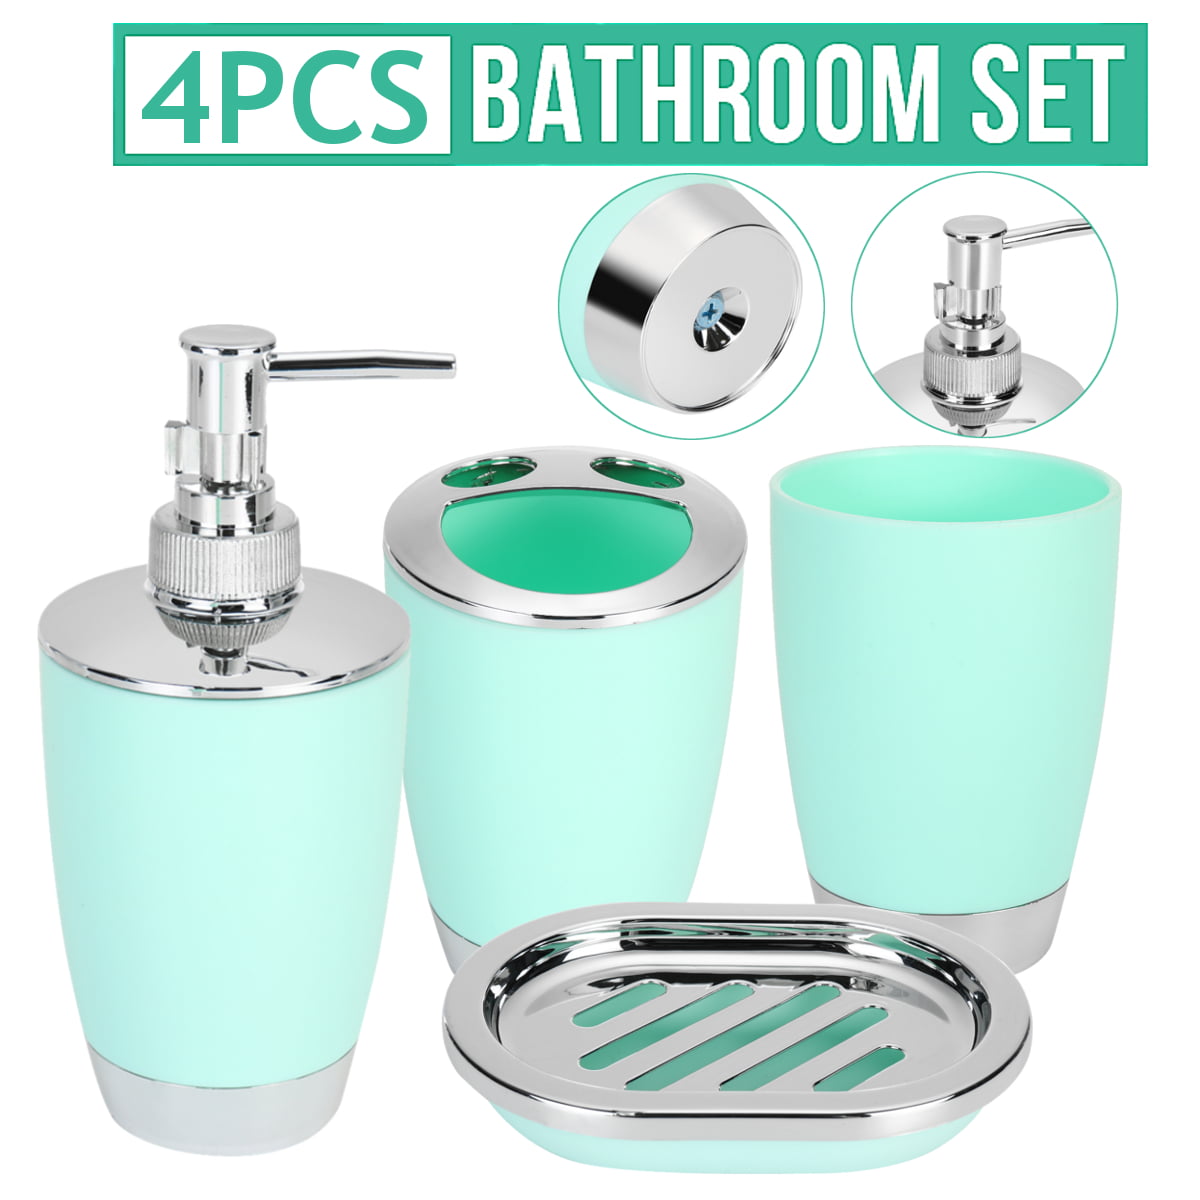 6 Pcs Bathroom Accessories Set Toothbrush Cup Bin Soap Dish Dispenser UK STOCK 